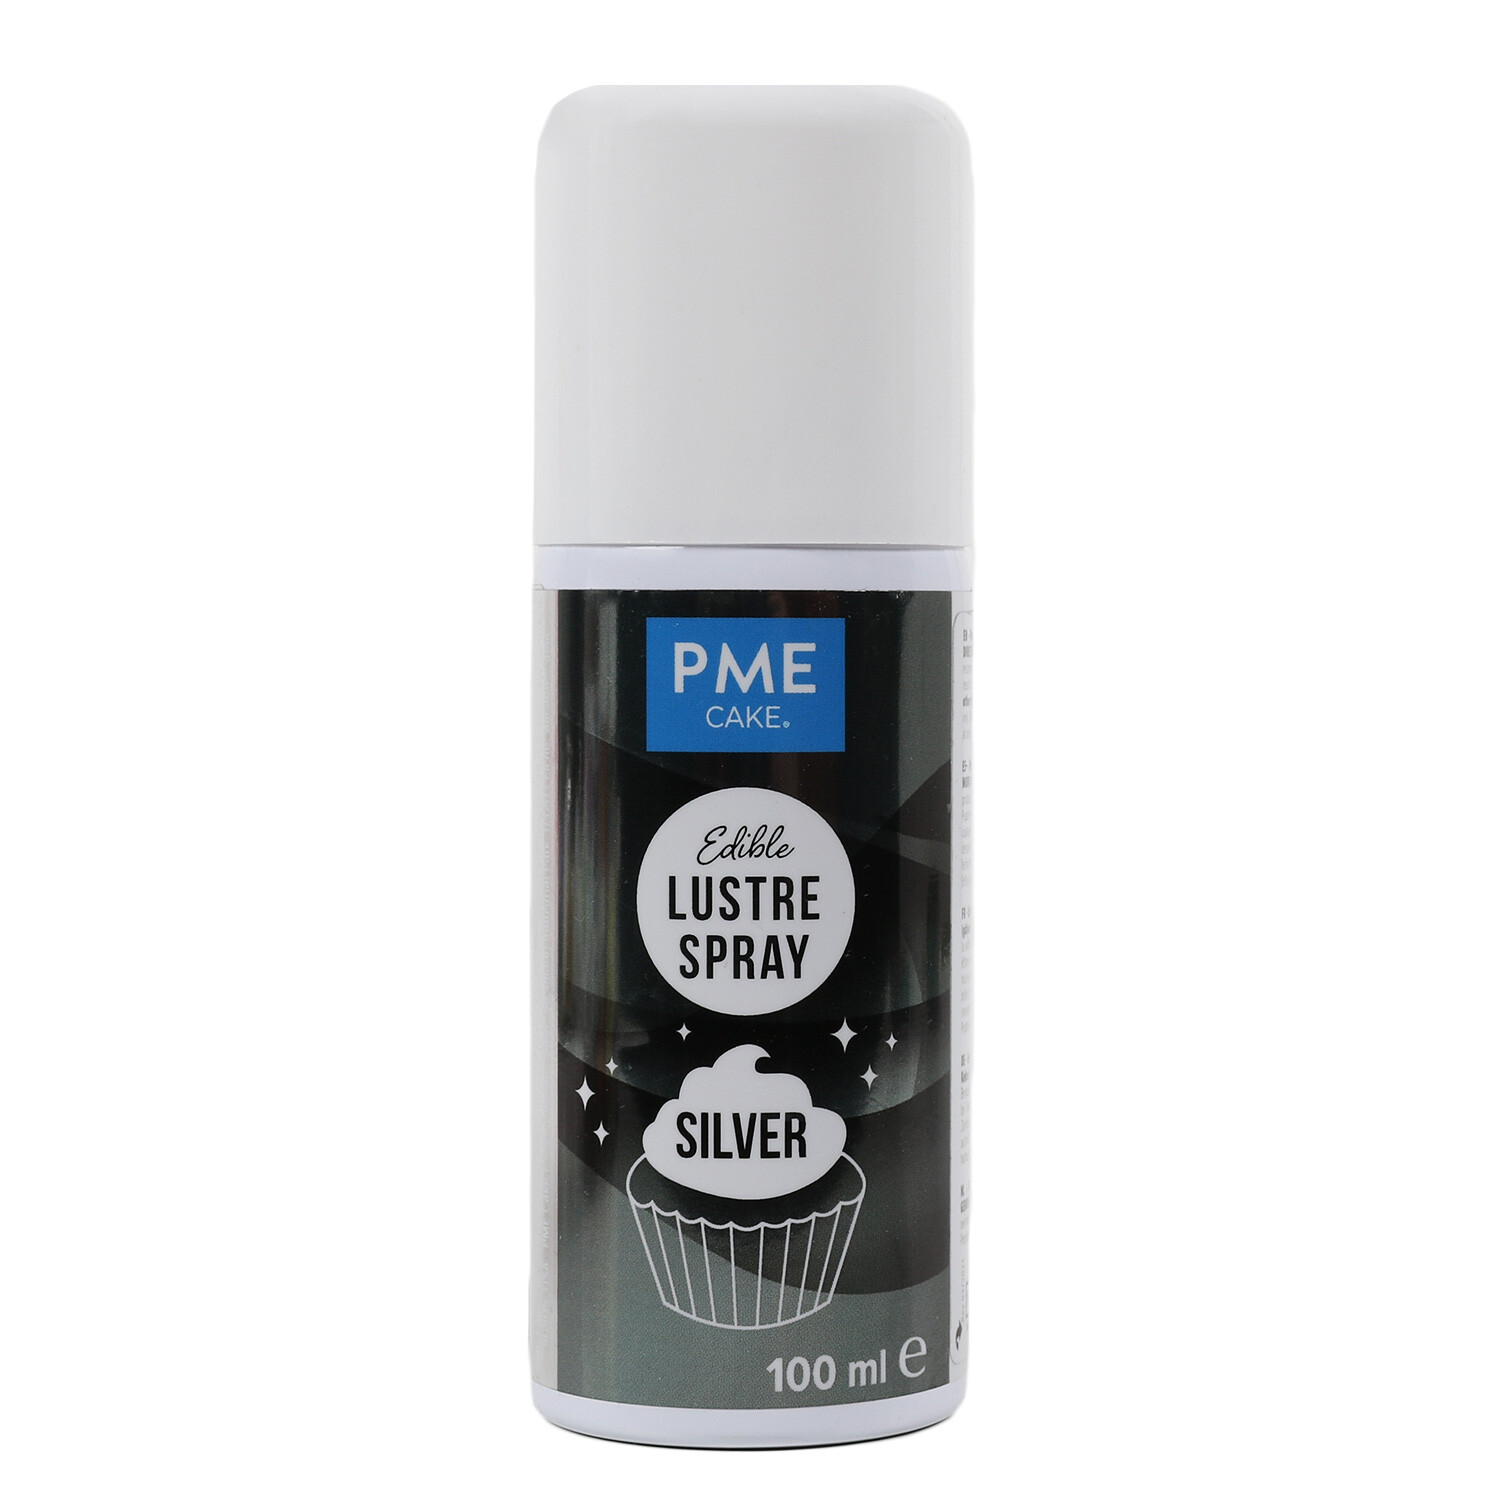 PME Edible Lustre Spray - Silver Image 1